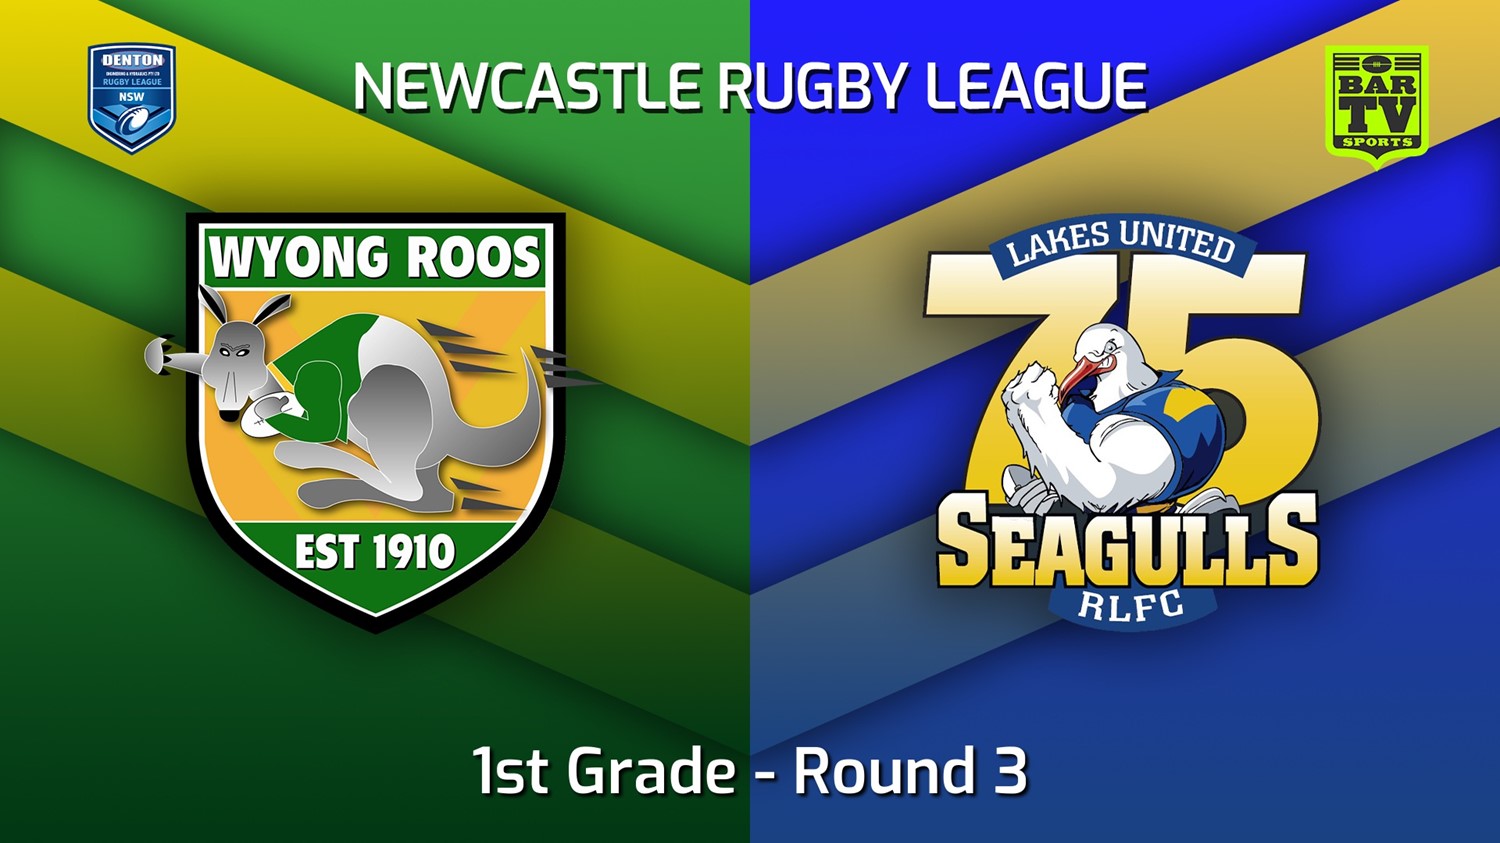 220409-Newcastle Round 3 - 1st Grade - Wyong Roos v Lakes United Minigame Slate Image